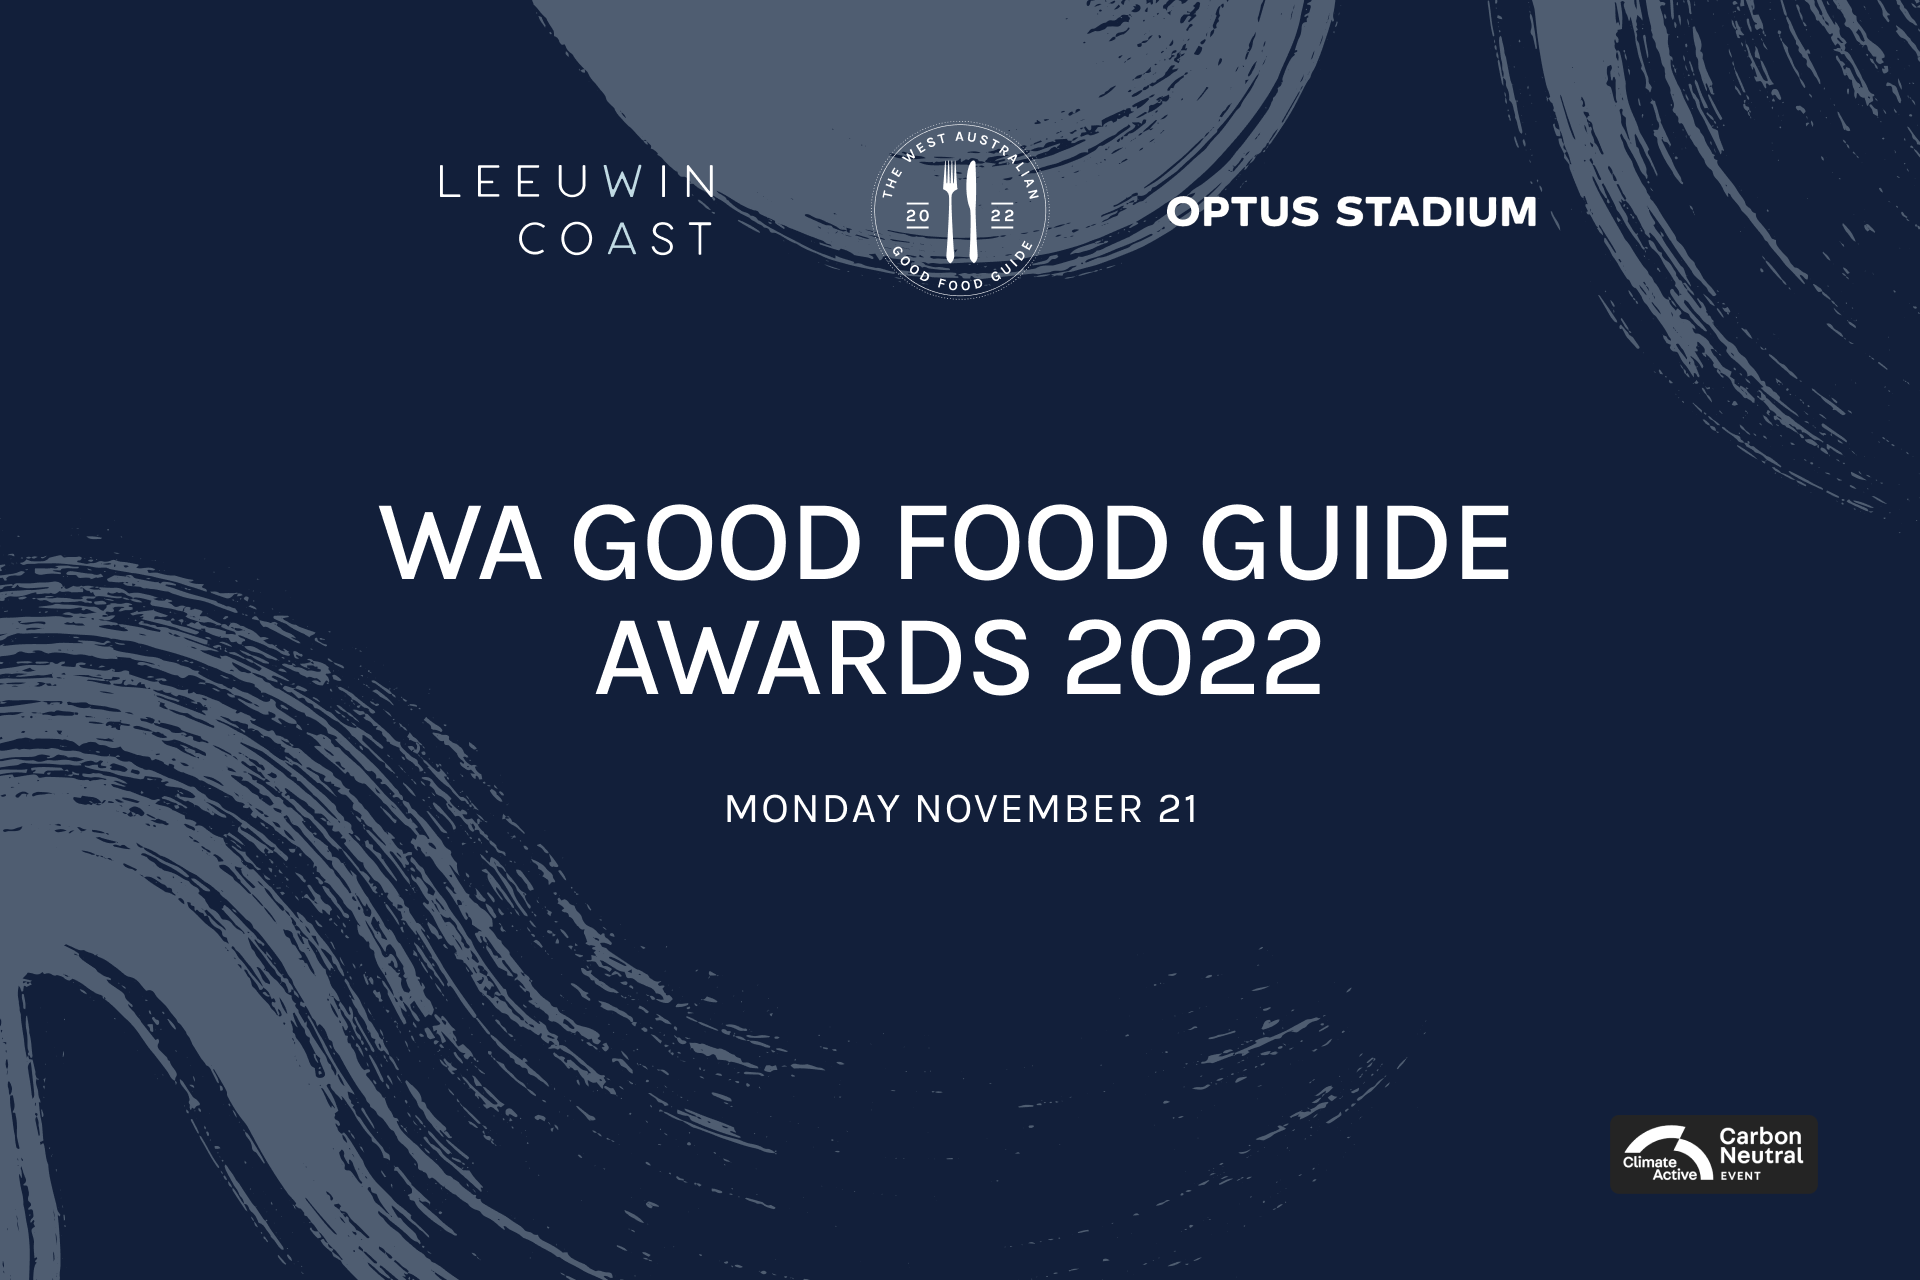 The 2022 WA Good Food Guide Awards Night, presented by Leeuwin Coast